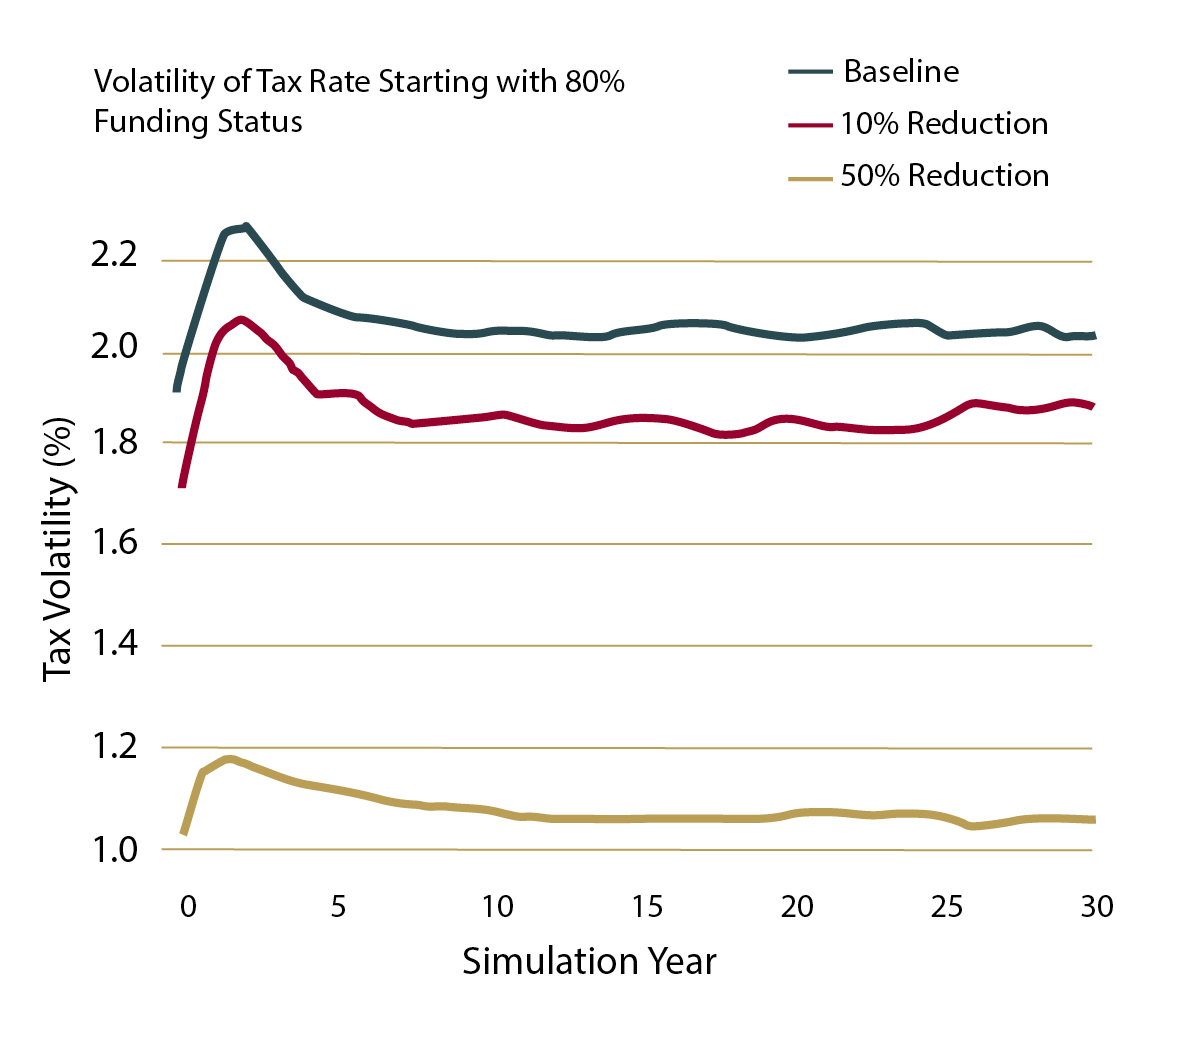 Exhibit 3 – Tax Volatility/Uncertainty Decrease with Partial DC